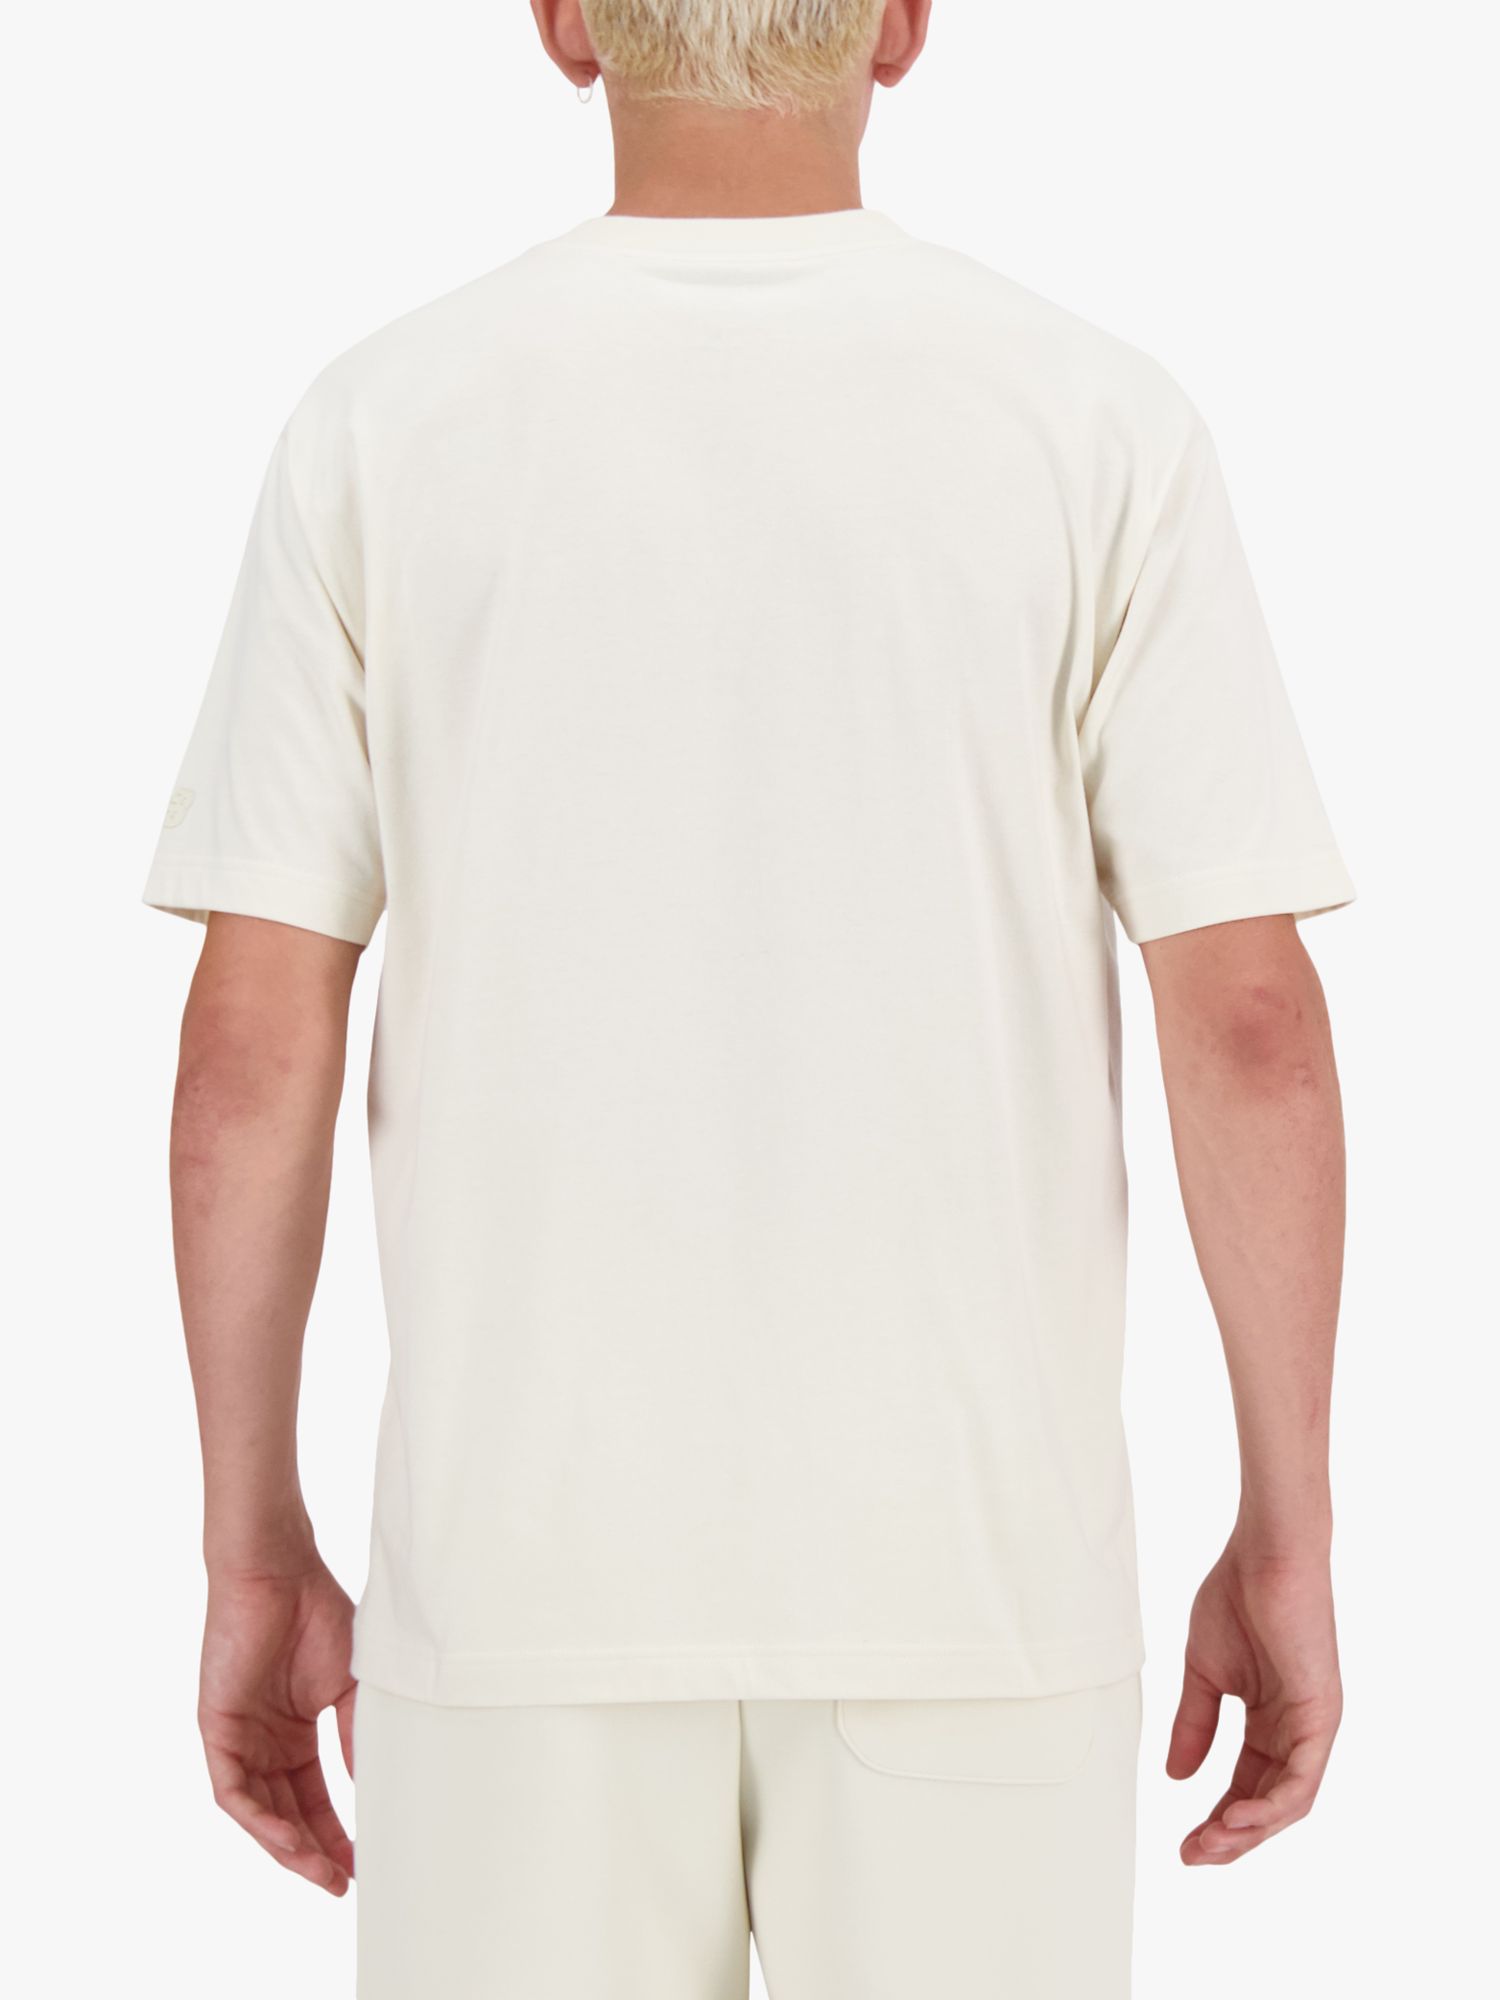 New Balance Shifted Printed T-Shirt, Cream, S